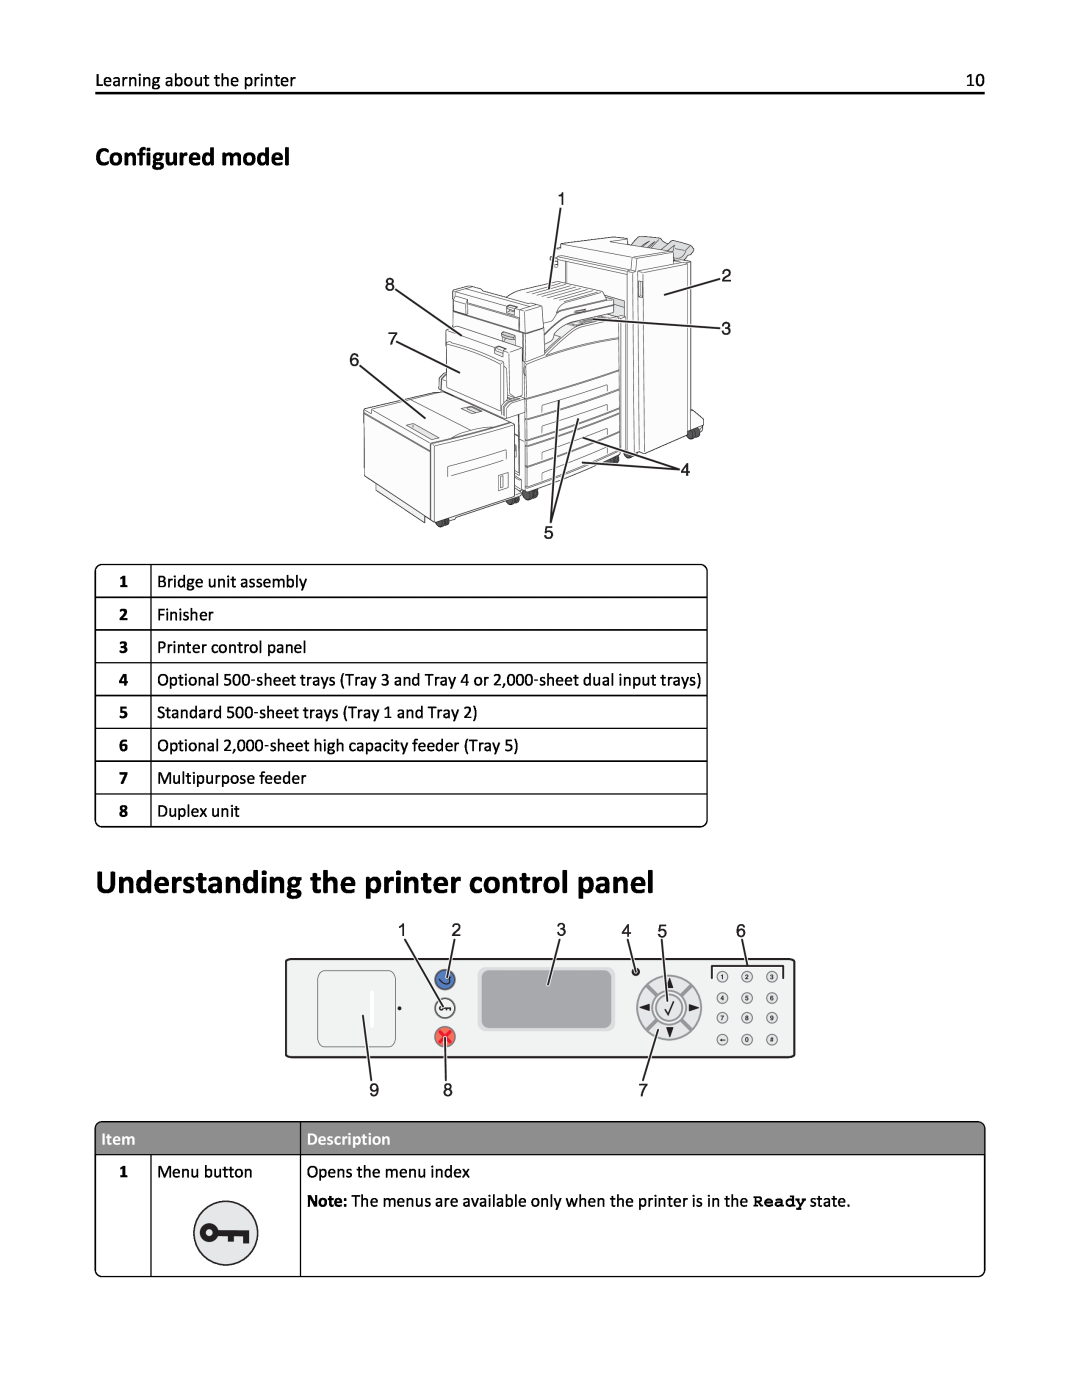 Lexmark W850DN, 110, 19Z0301 manual Understanding the printer control panel, Configured model, Description 